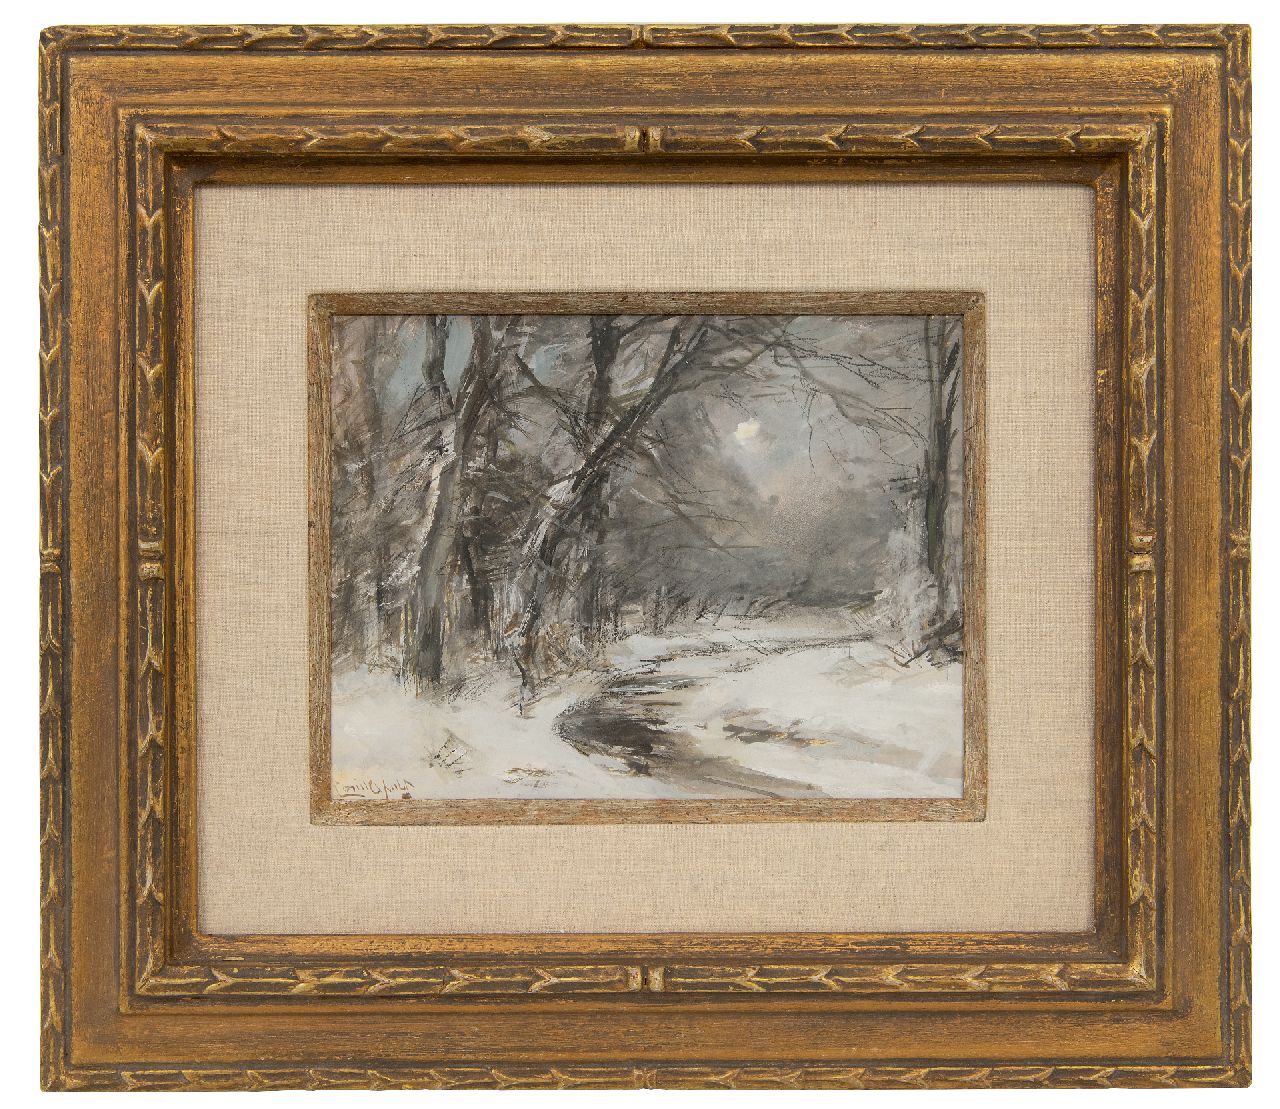 Apol L.F.H.  | Lodewijk Franciscus Hendrik 'Louis' Apol, Snowy forest scene, gouache on paper 15.5 x 20.5 cm, signed l.l.